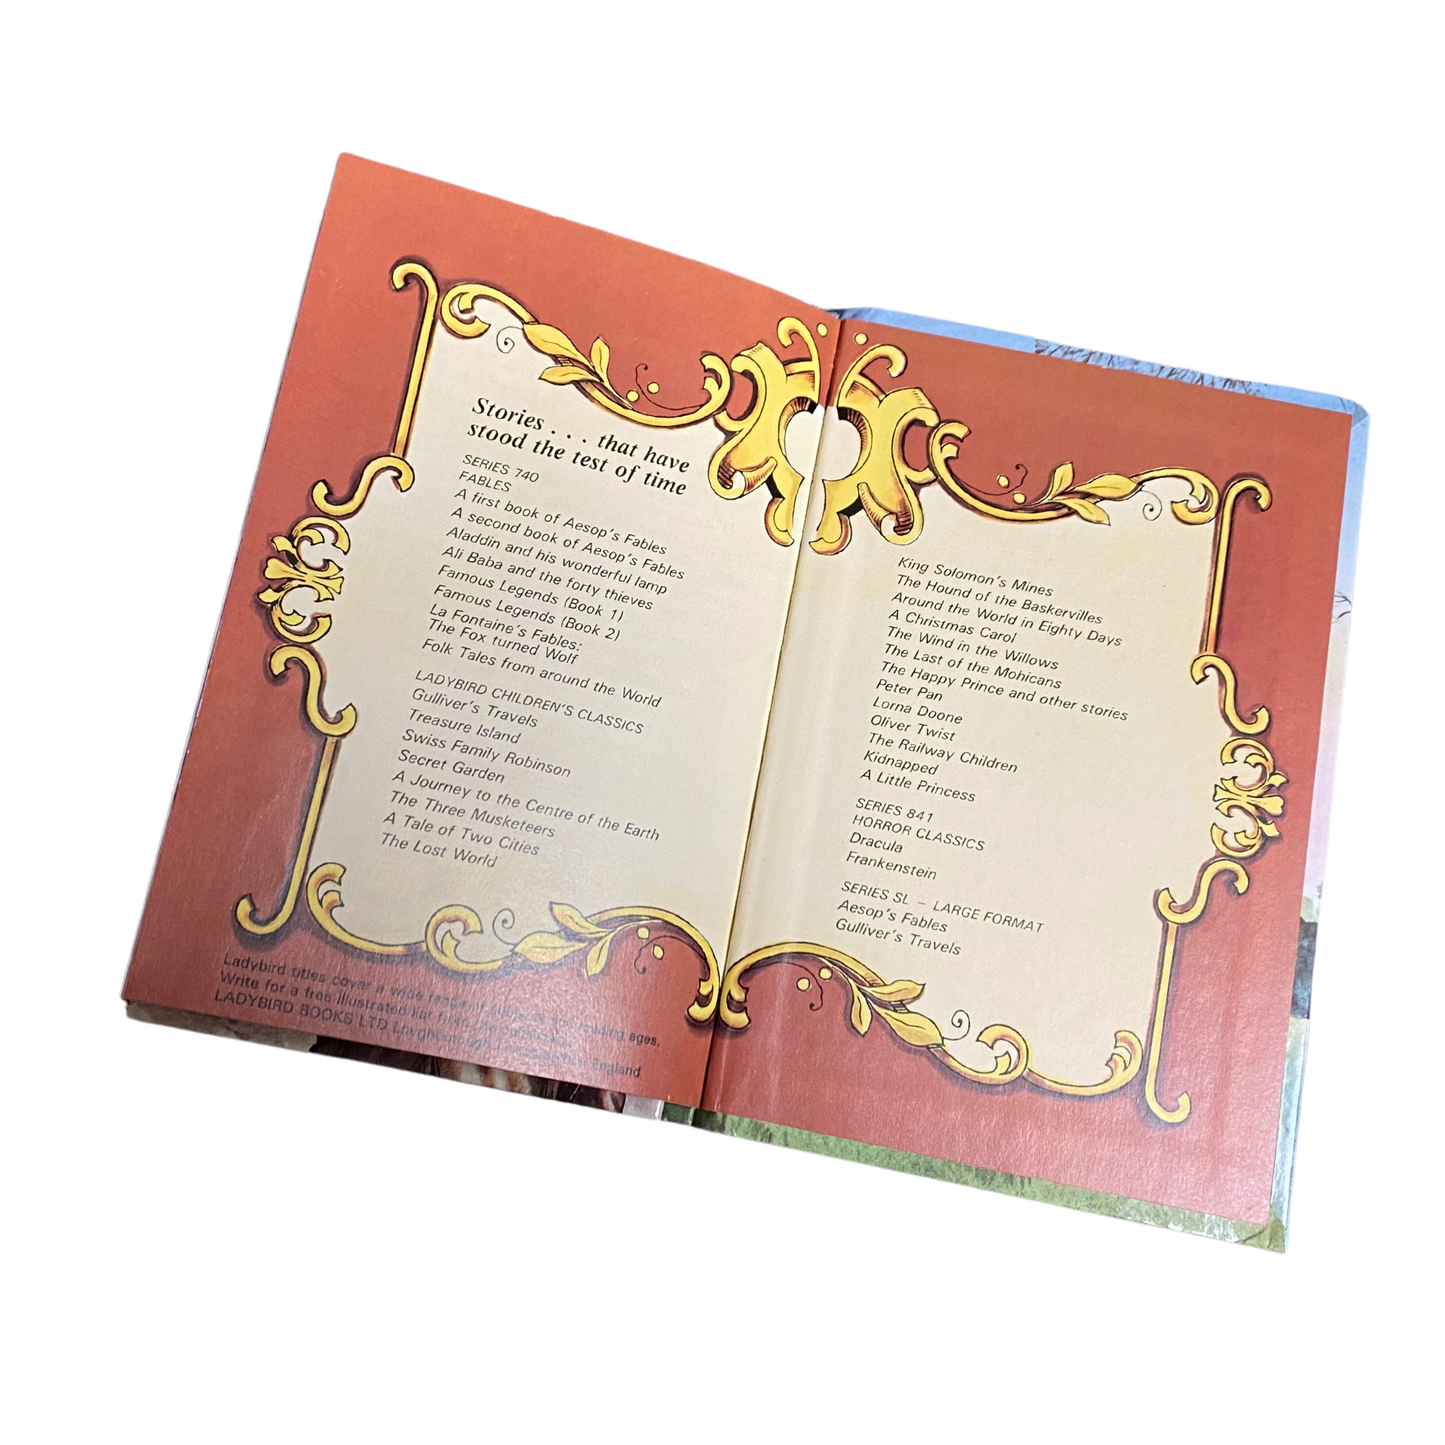 The Three Musketeers: Vintage Ladybird book Children’s Classics. Series 740. Nostalgic gift idea